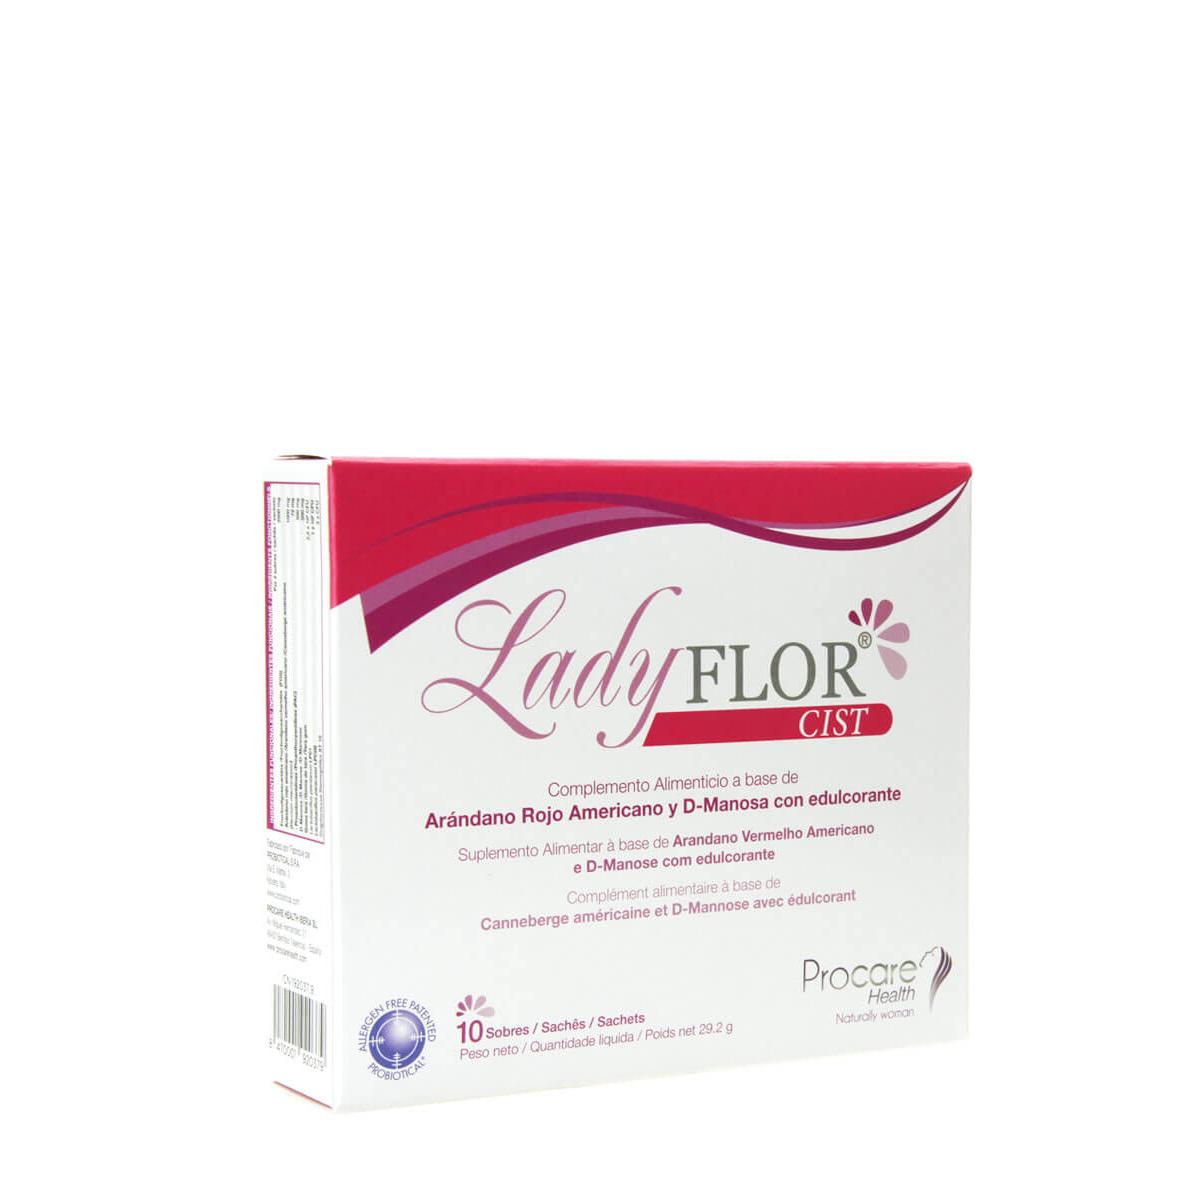 Procare Health - Ladyflor cist 10 sobres